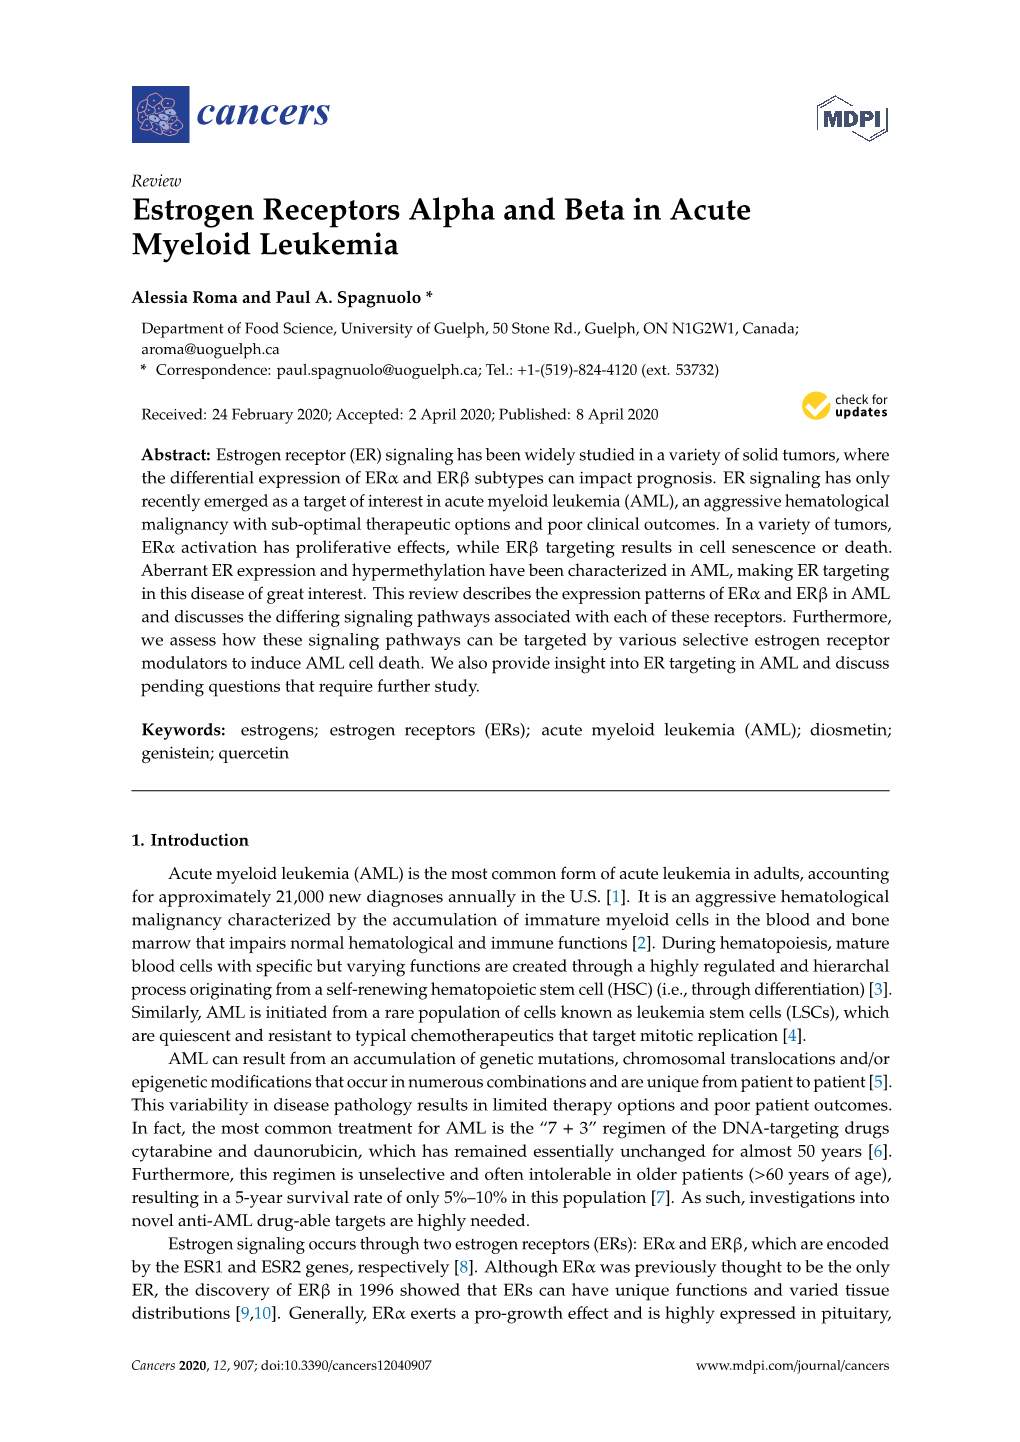 Estrogen Receptors Alpha and Beta in Acute Myeloid Leukemia